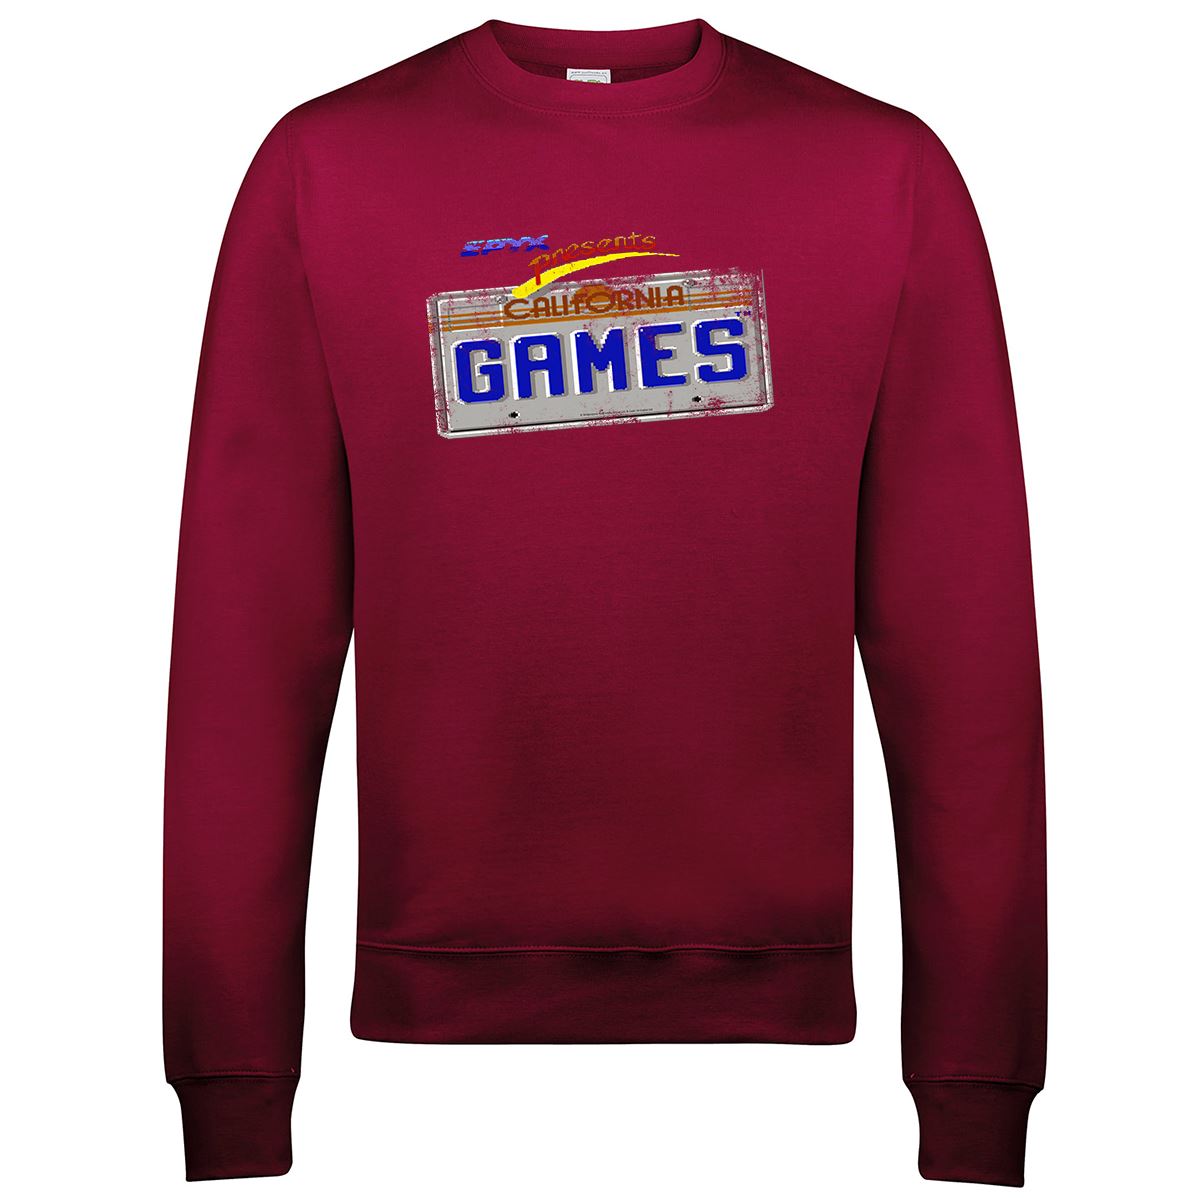 California Games 'License Plate' Retro Gaming Sweatshirt Sweatshirt Seven Squared Small Burgundy 